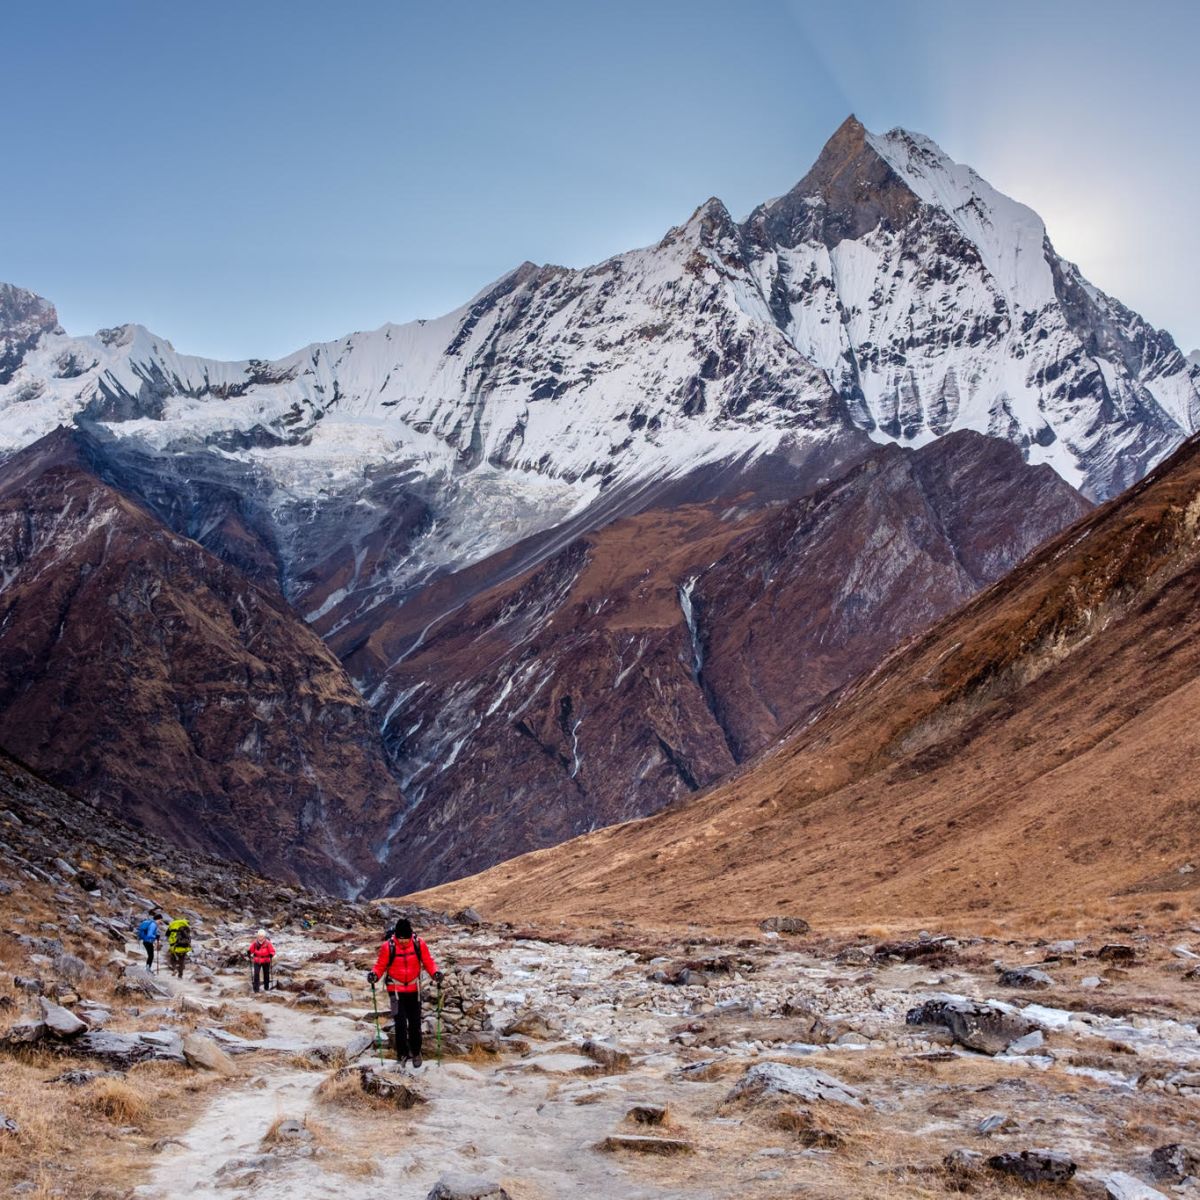 Kangtega mountain and trekkers in Khumbu region